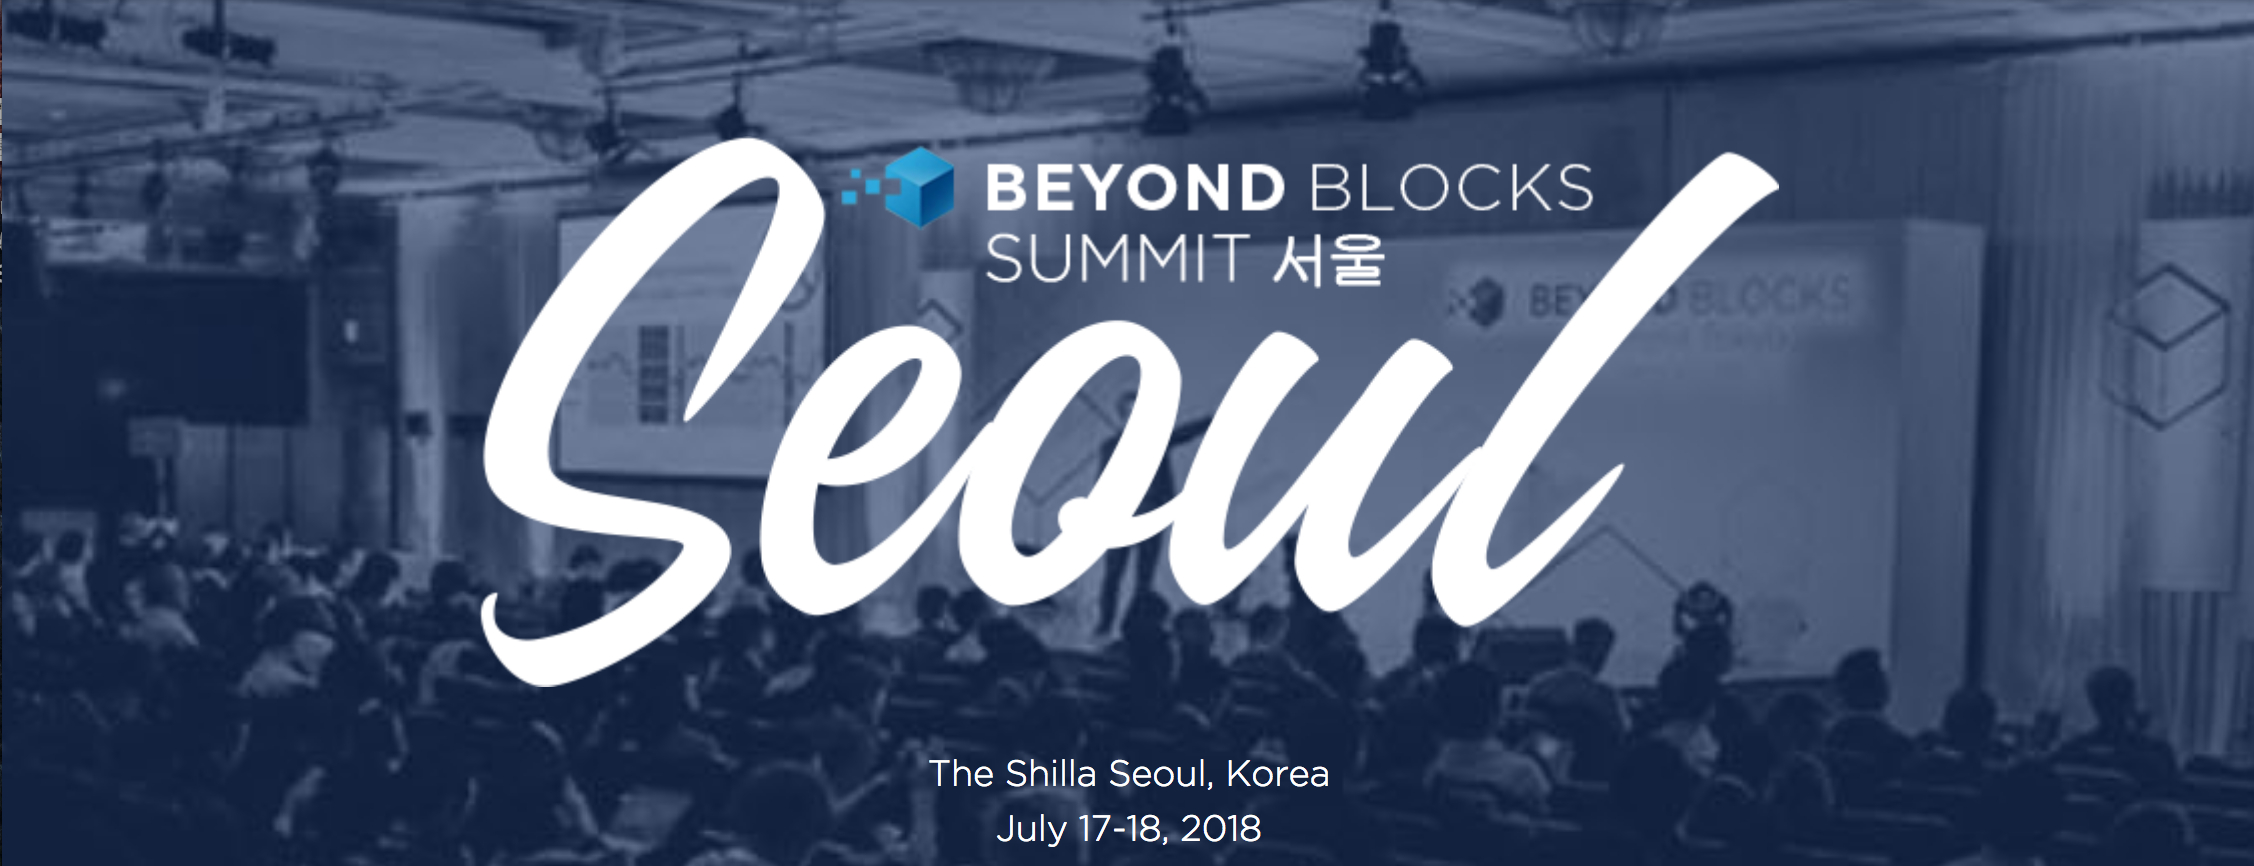 Beyond Blocks Summit Seoul image